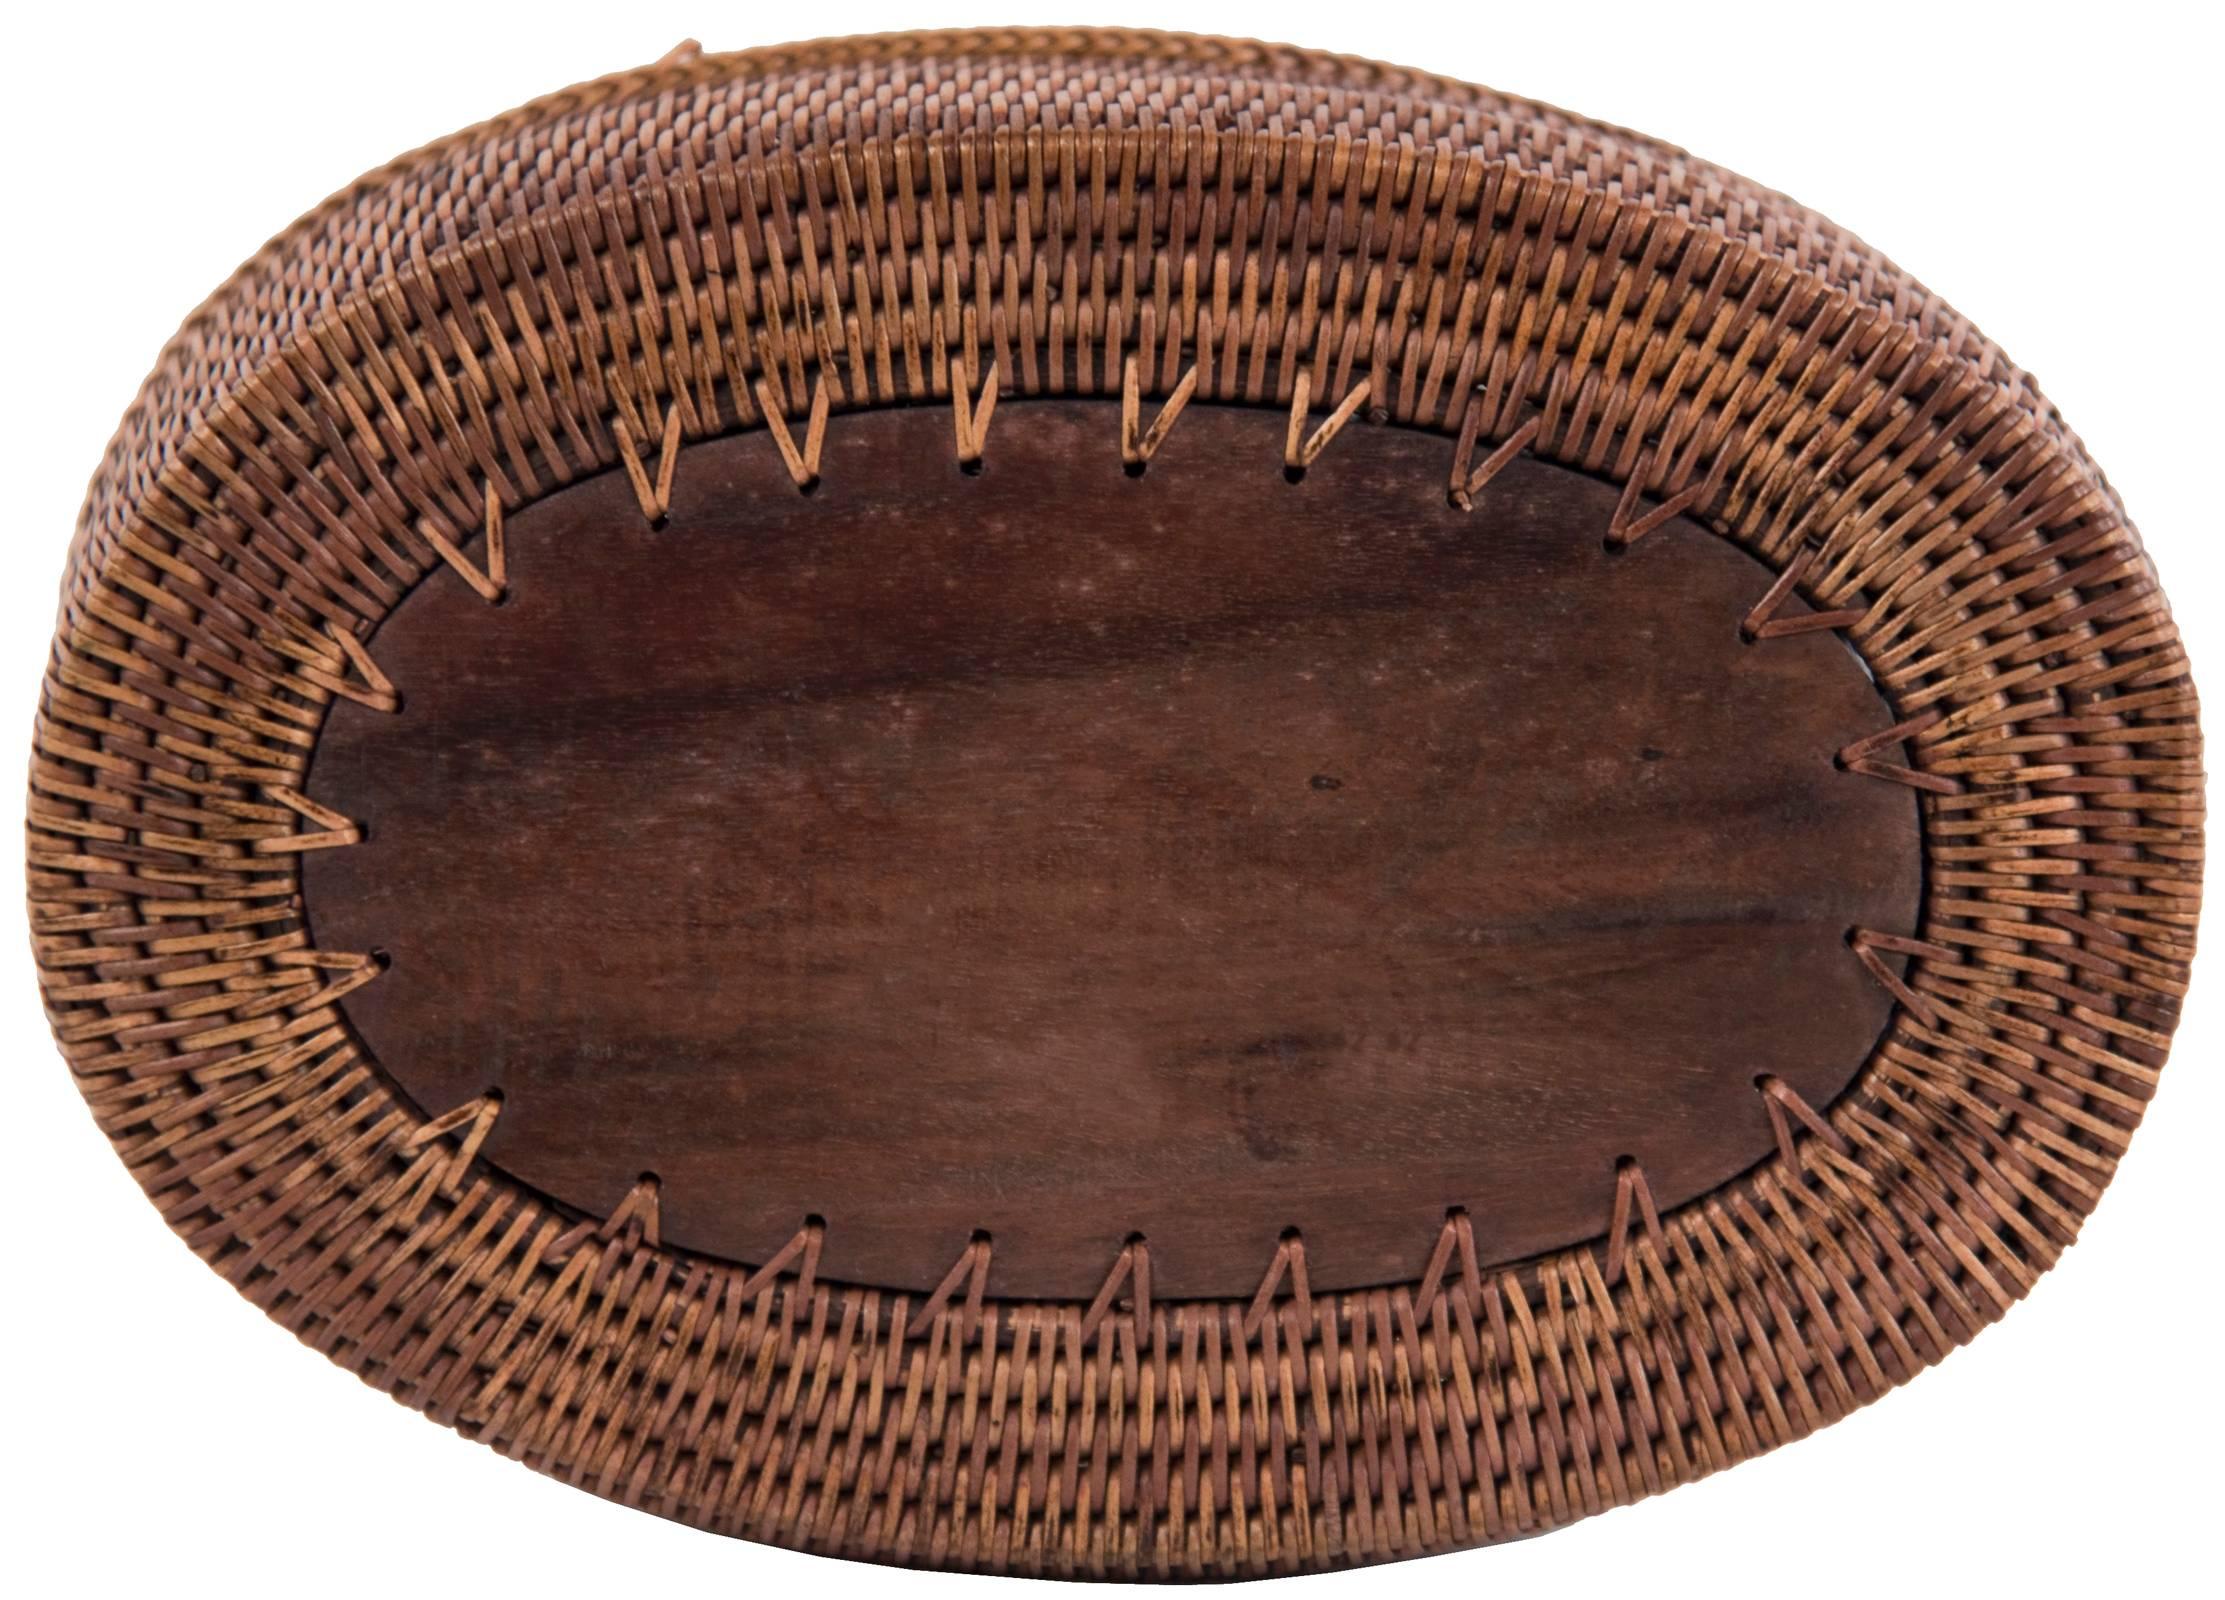 Wood Northwestern Native American Oval Basket Box Lidded with Polychrome Frog Motif